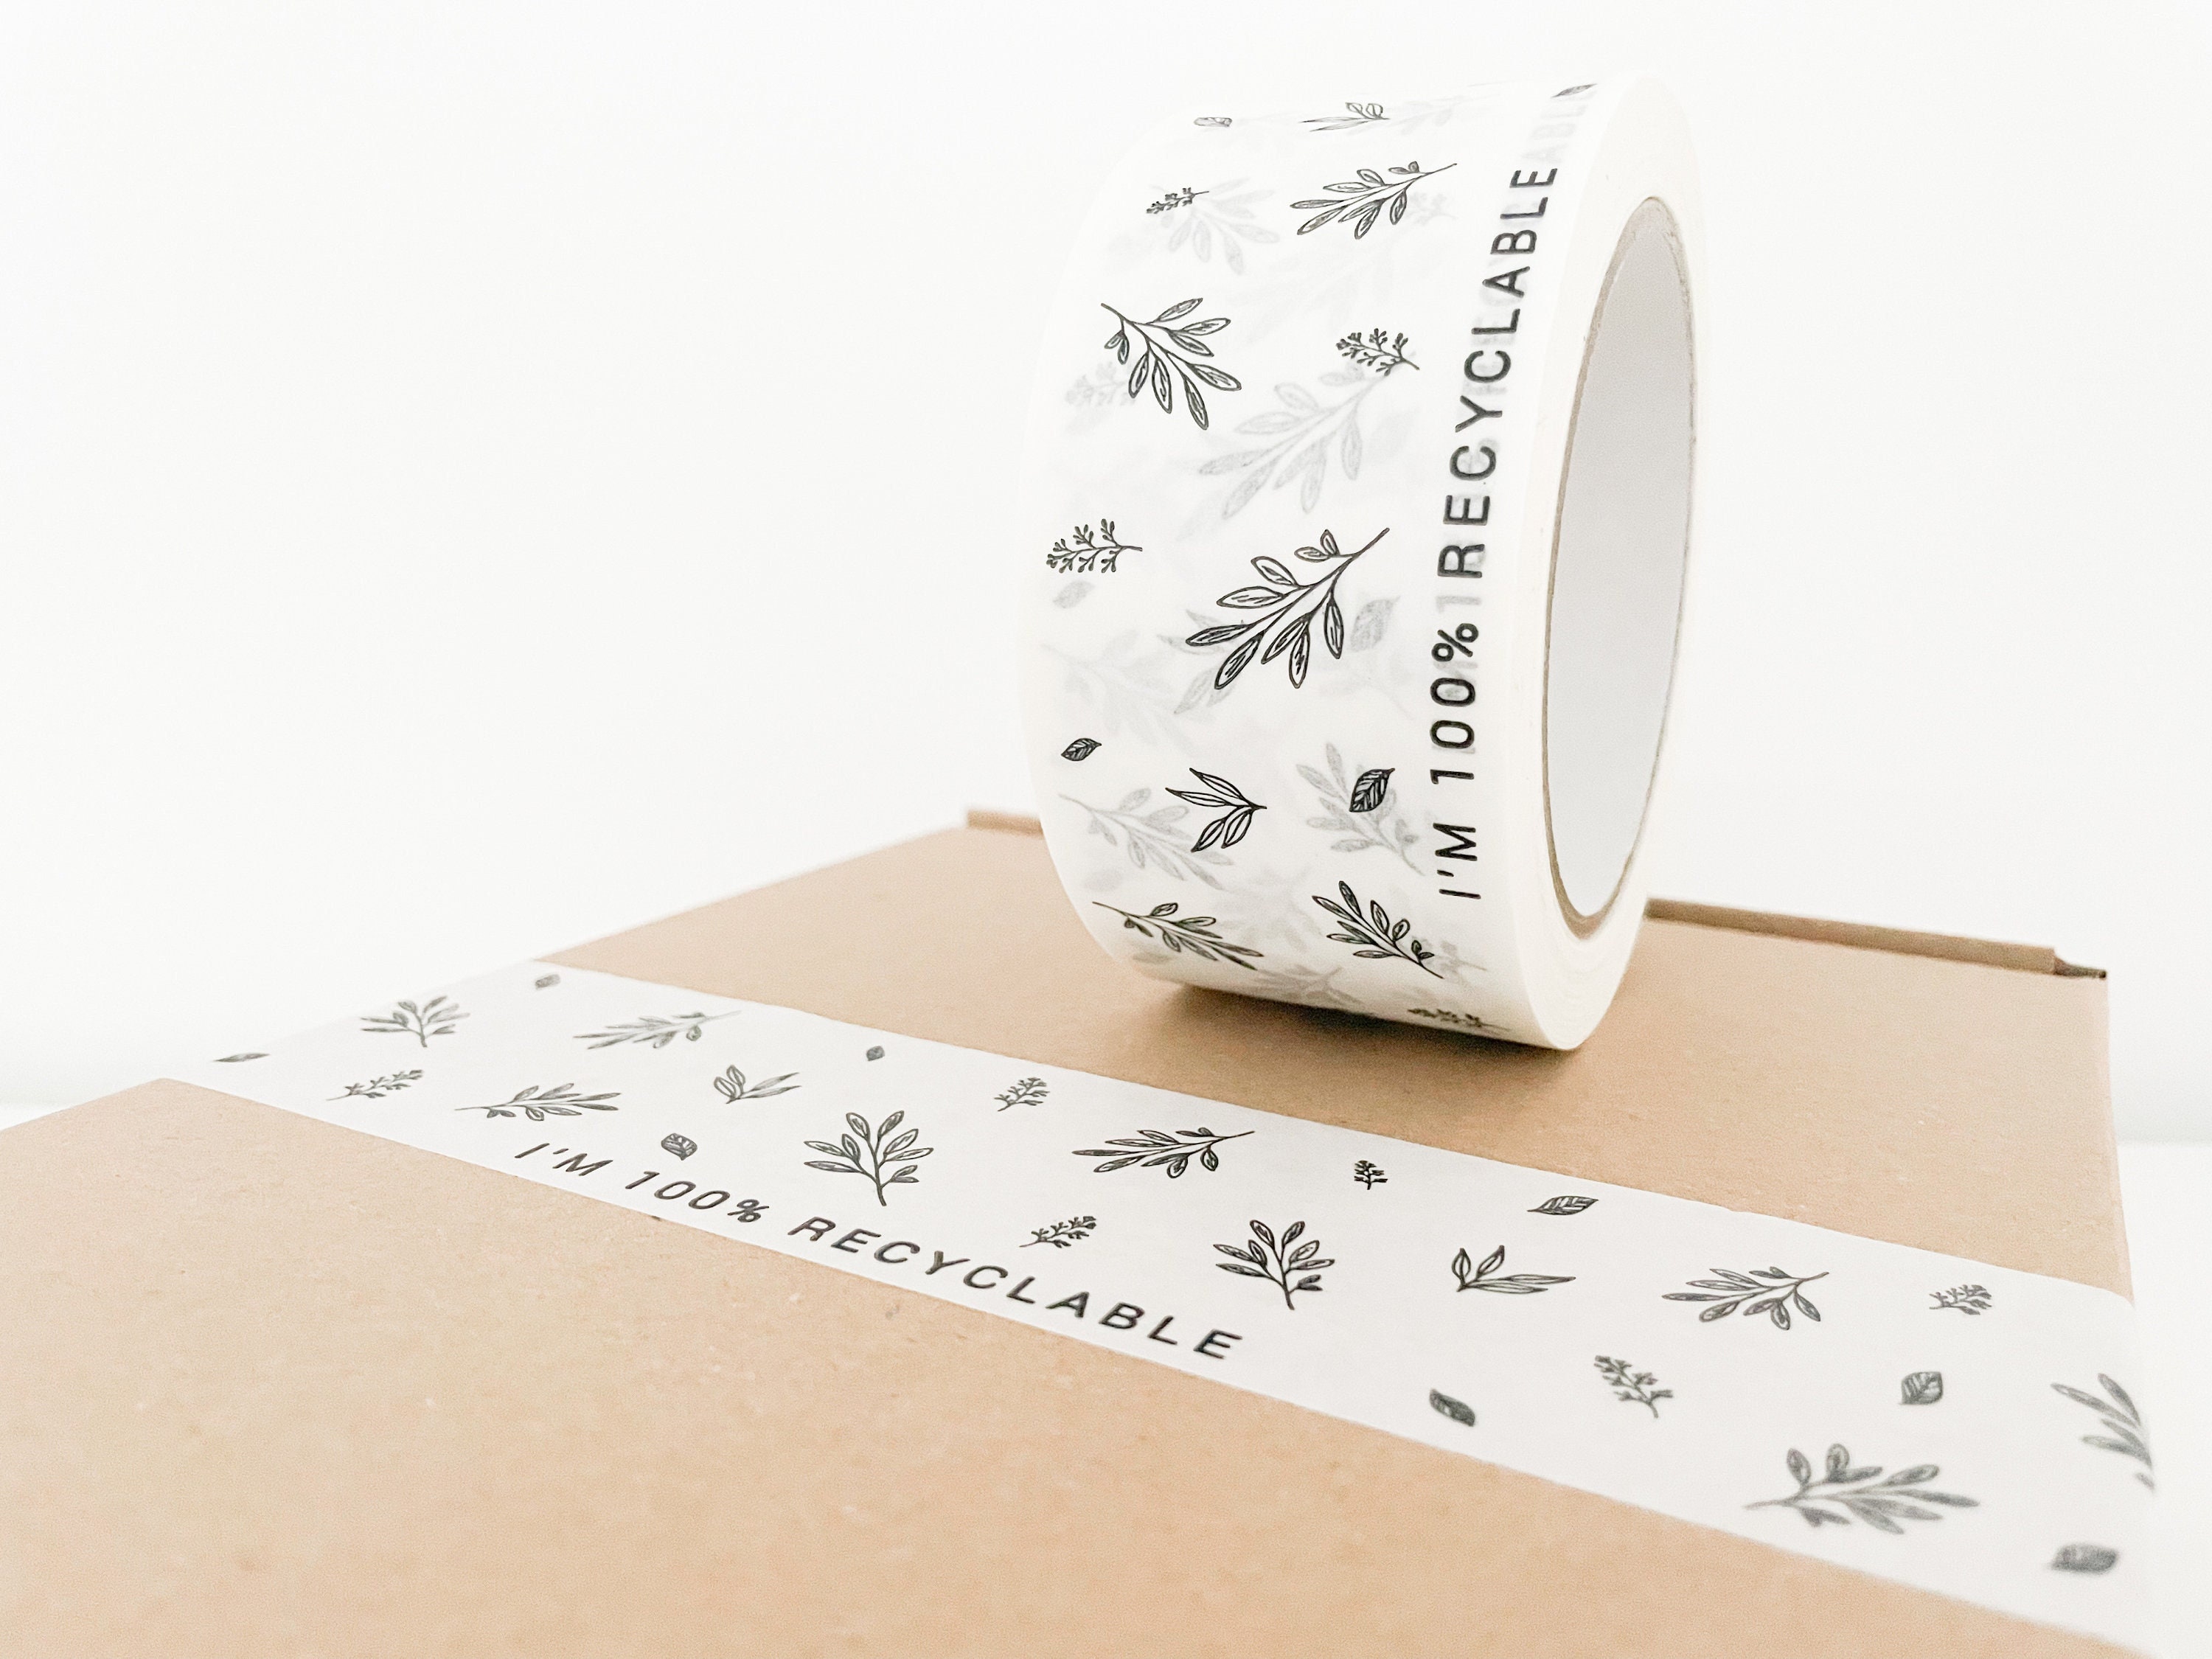 Dark Green Kraft Roll Wrapping Paper 500mm Choose Length